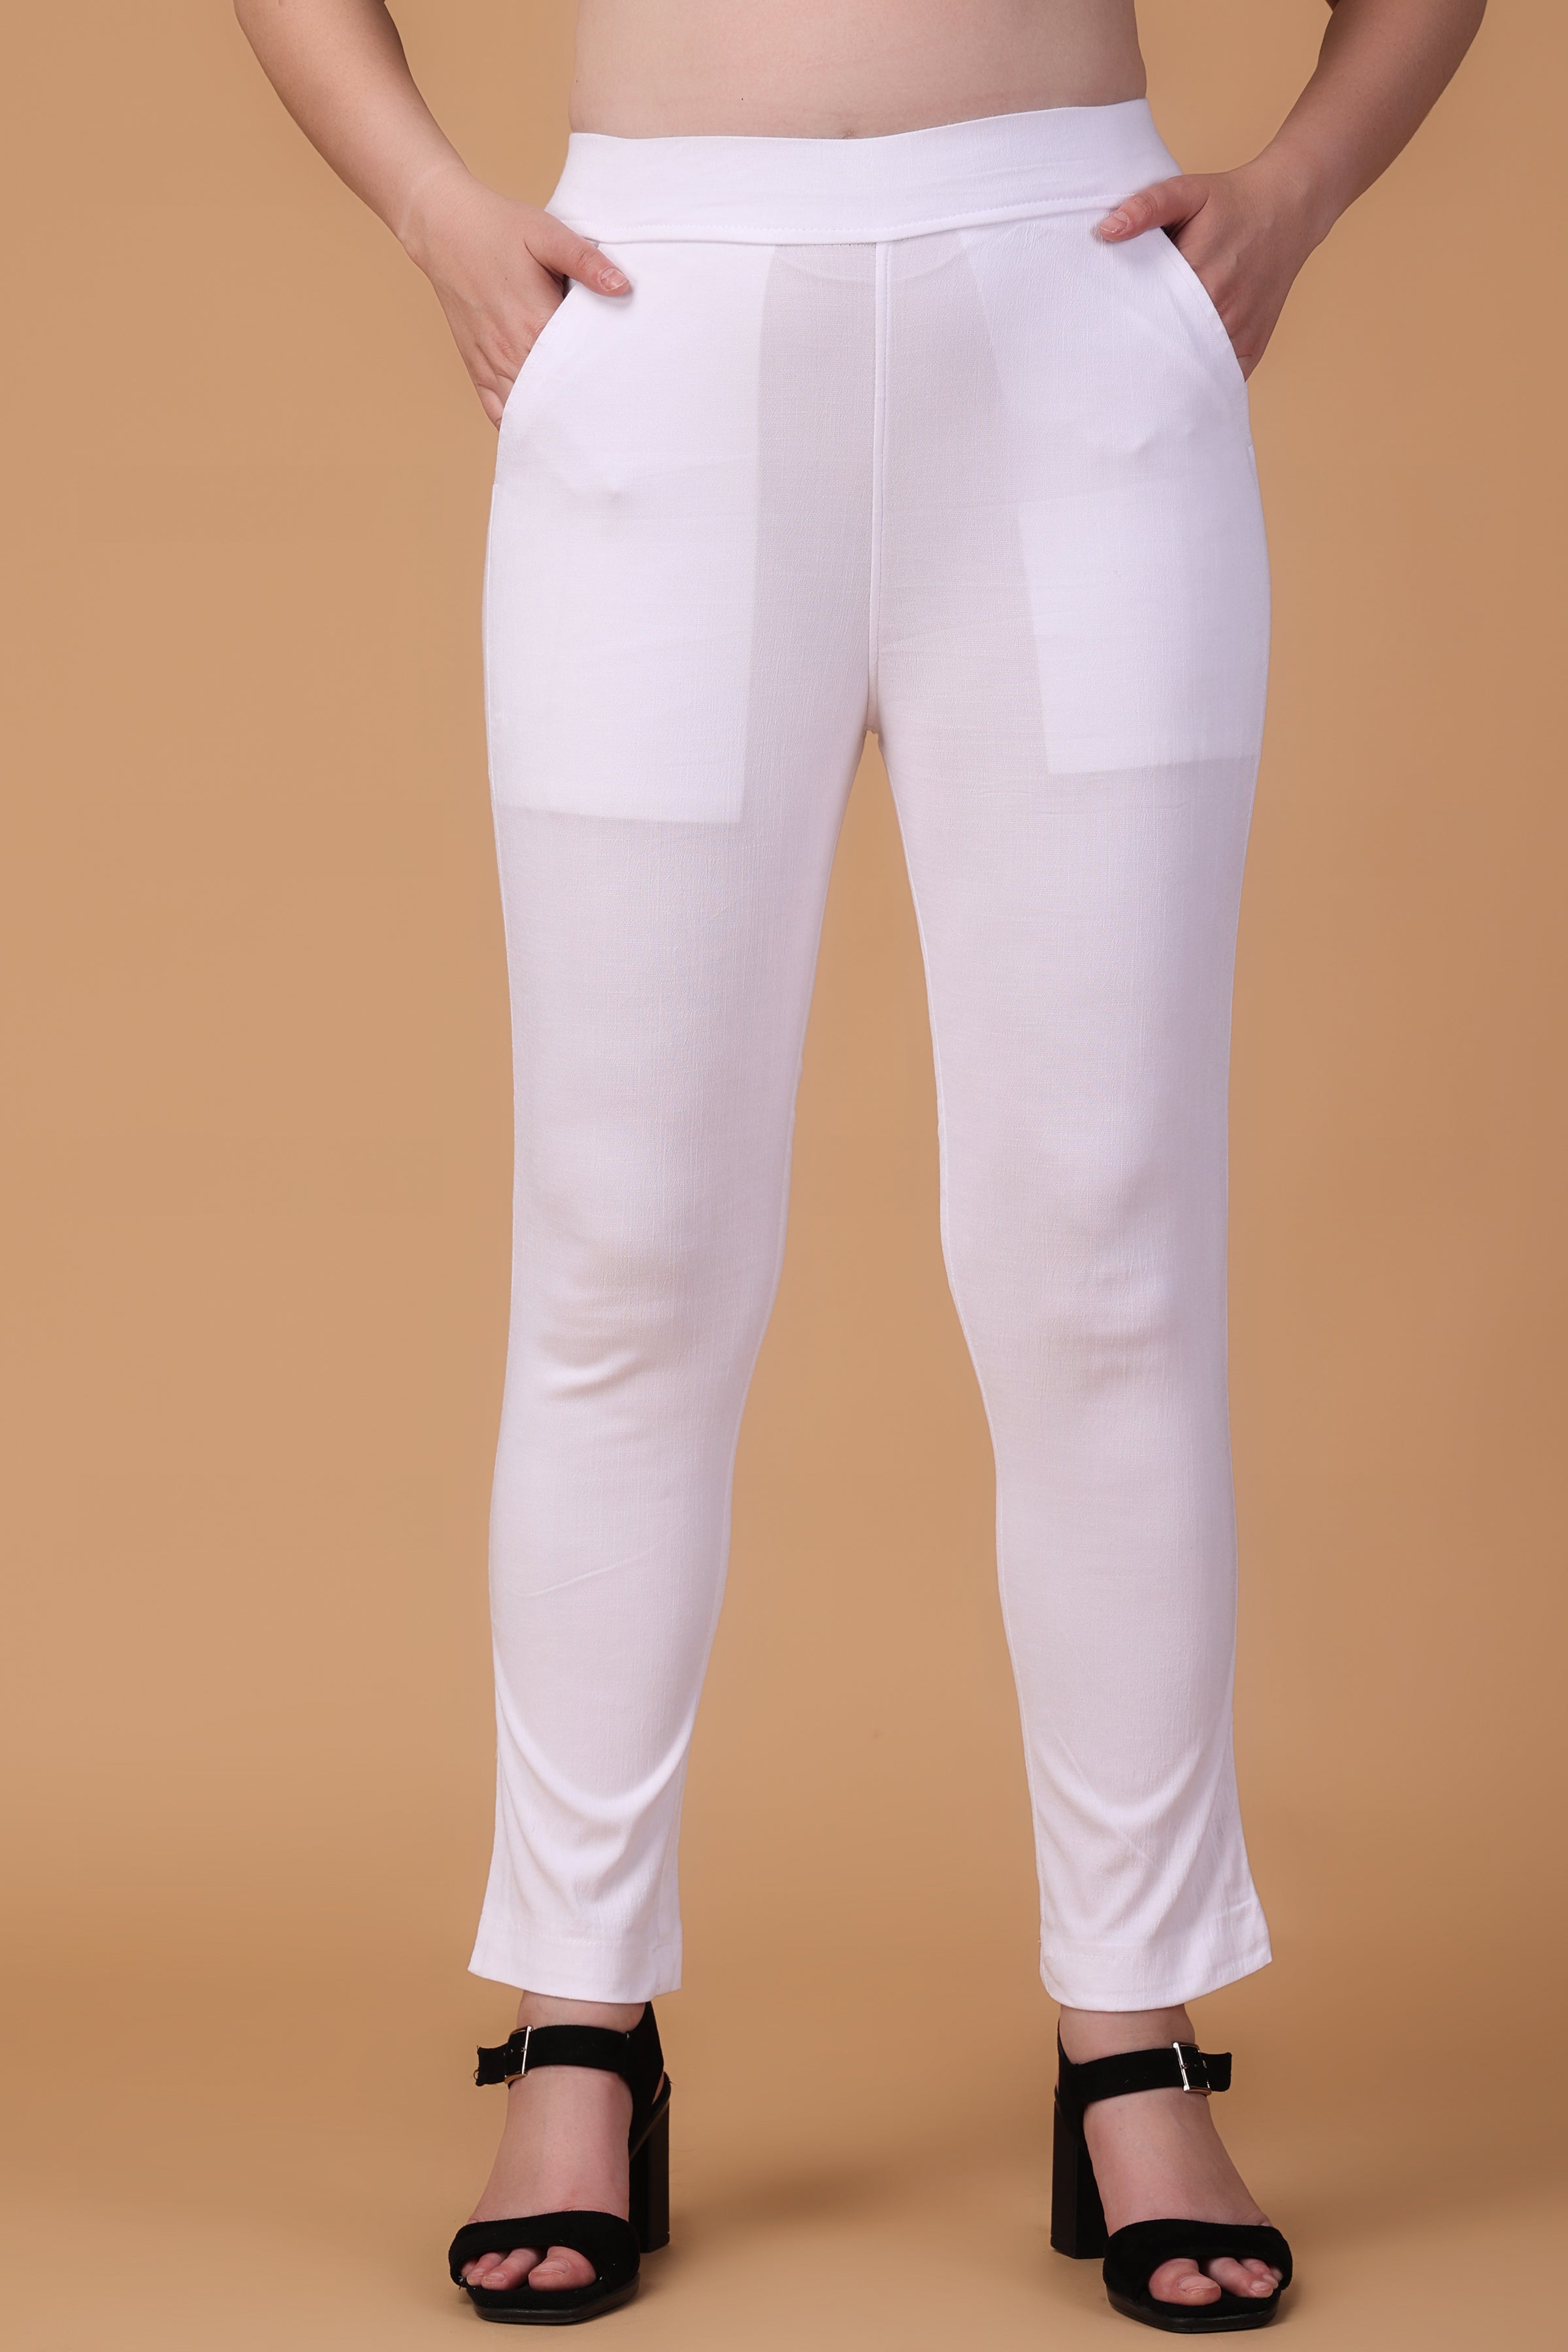 Amazon.com: WALLLL Yoga Pants Women's Skin-Friendly Lycra high Waist Peach  Hip Lifting Running high Elastic Fitness Sports Pants : Clothing, Shoes &  Jewelry